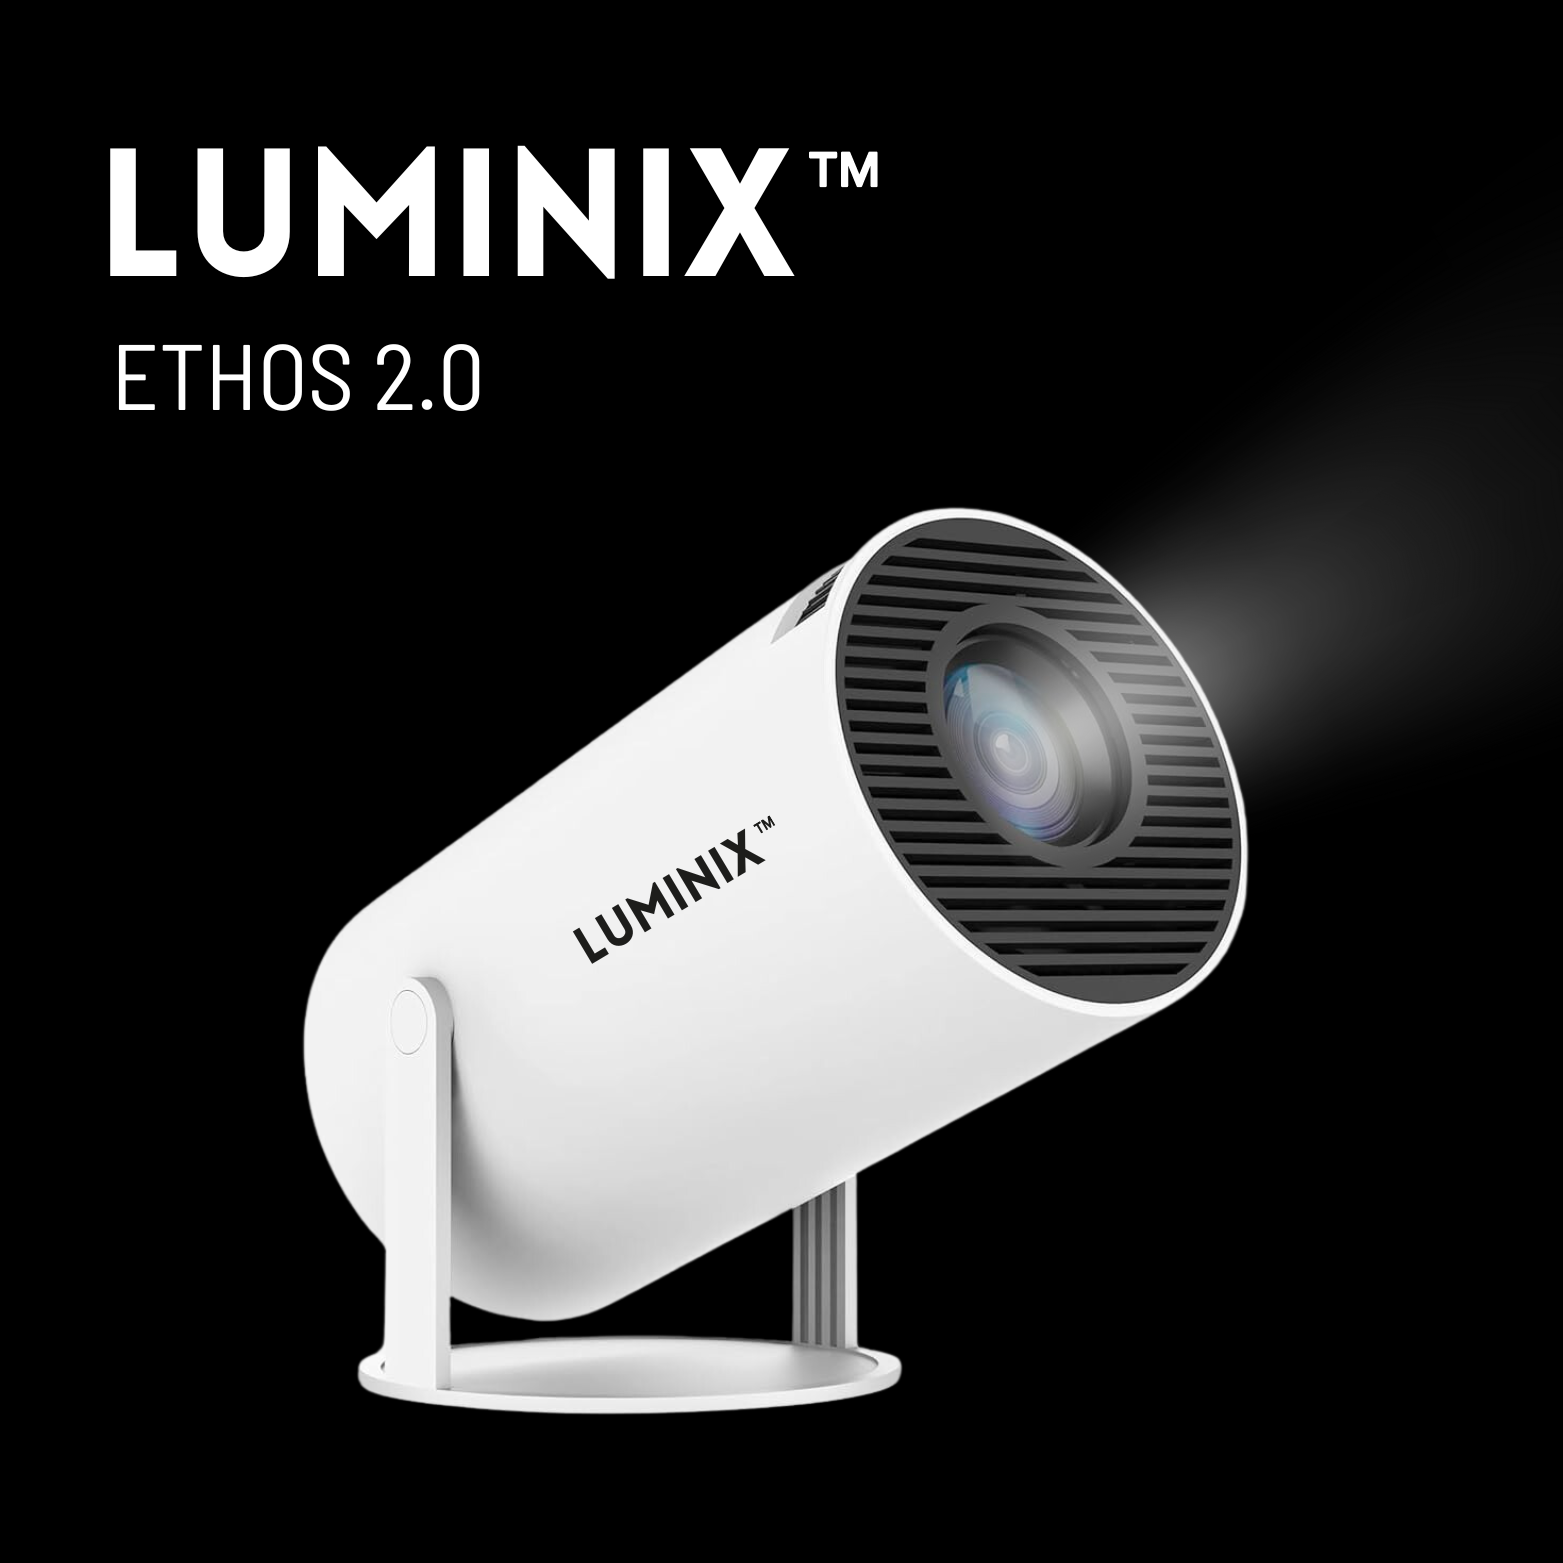 LUMINIX™ ETHOS 2.0 Projector